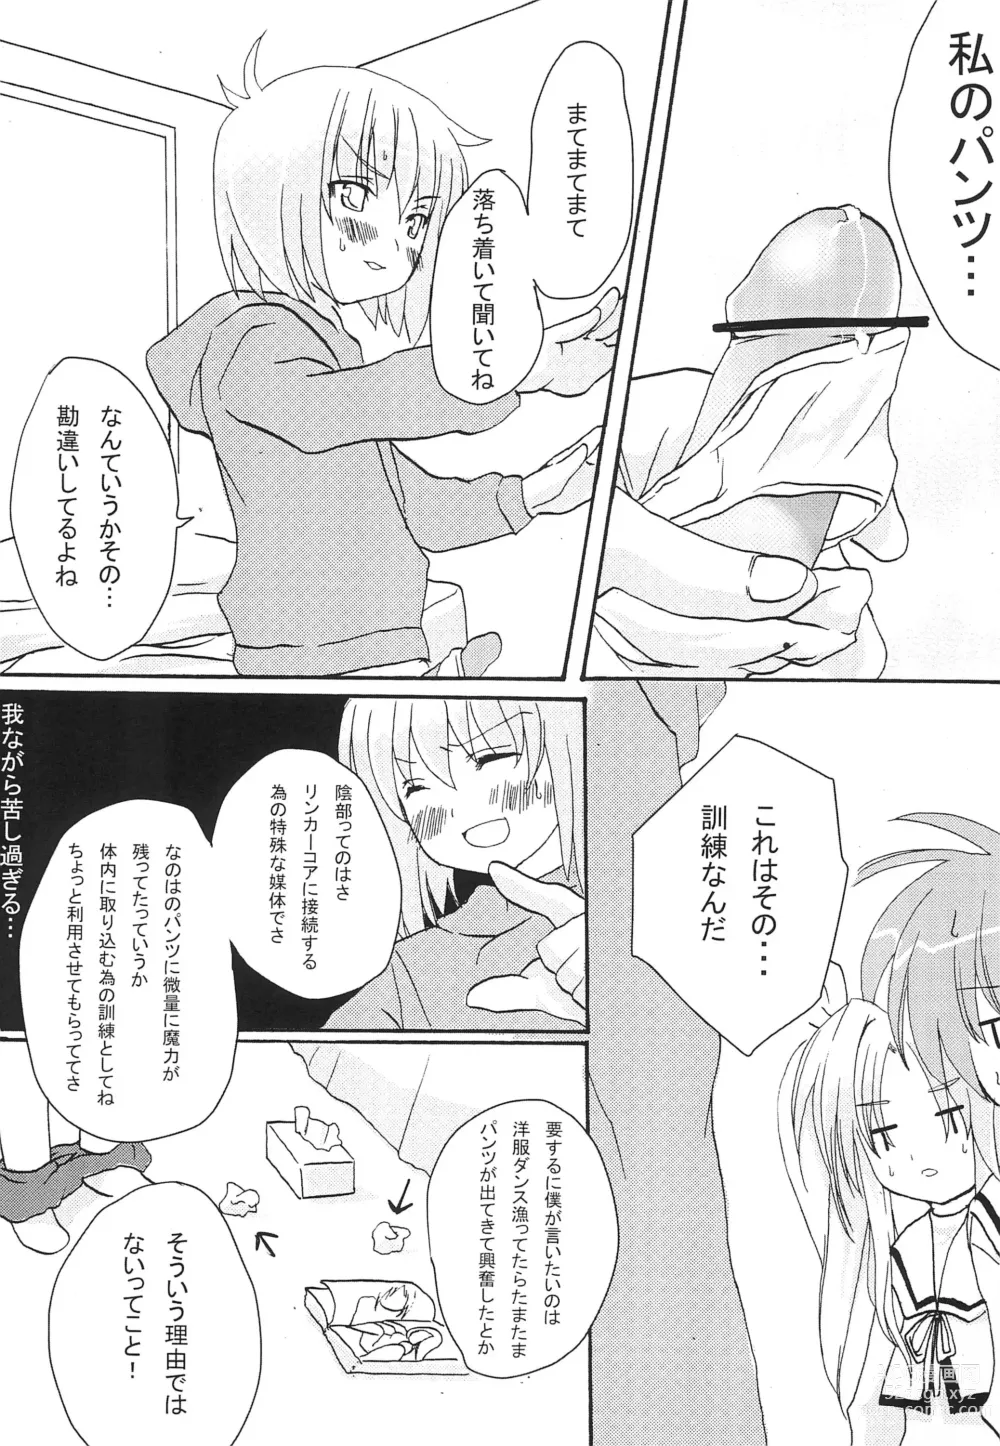 Page 5 of doujinshi MARMALADE